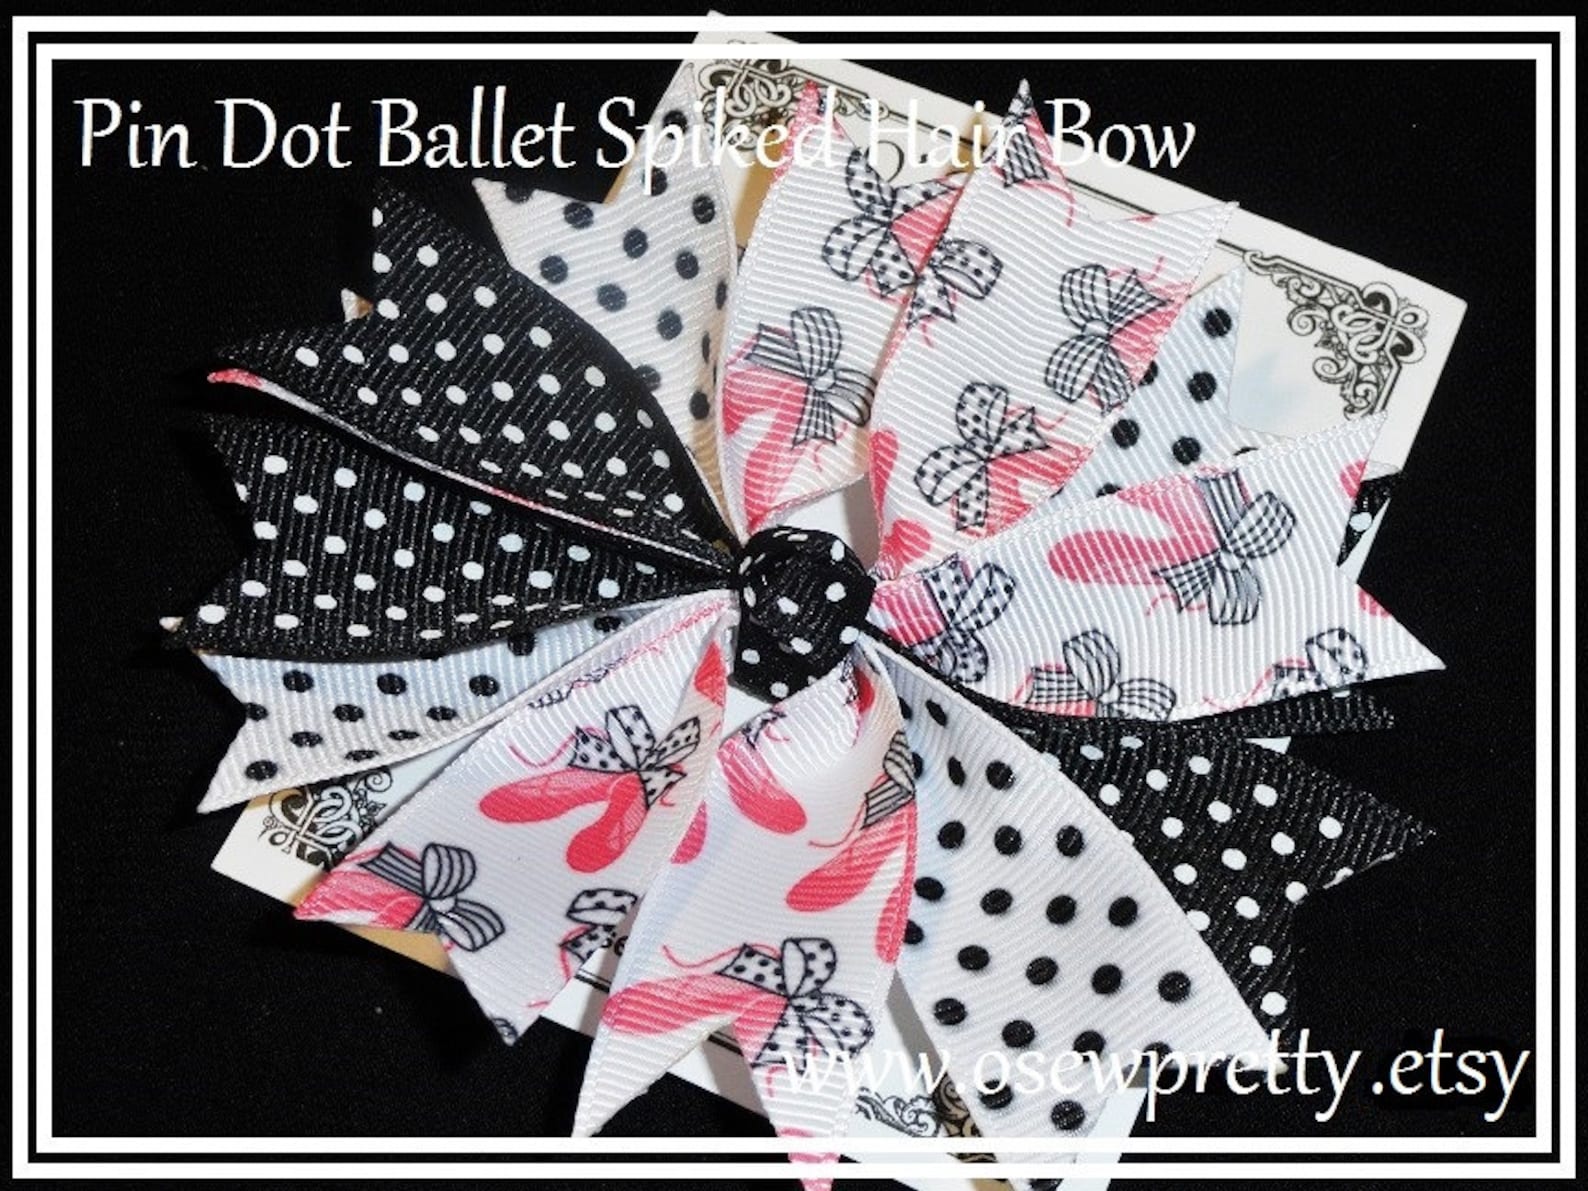 ballet hair bows, spiked ballerina hair bows, pink and black ballet hair bows, dance hair bows, girls hair accessory, spiked bal